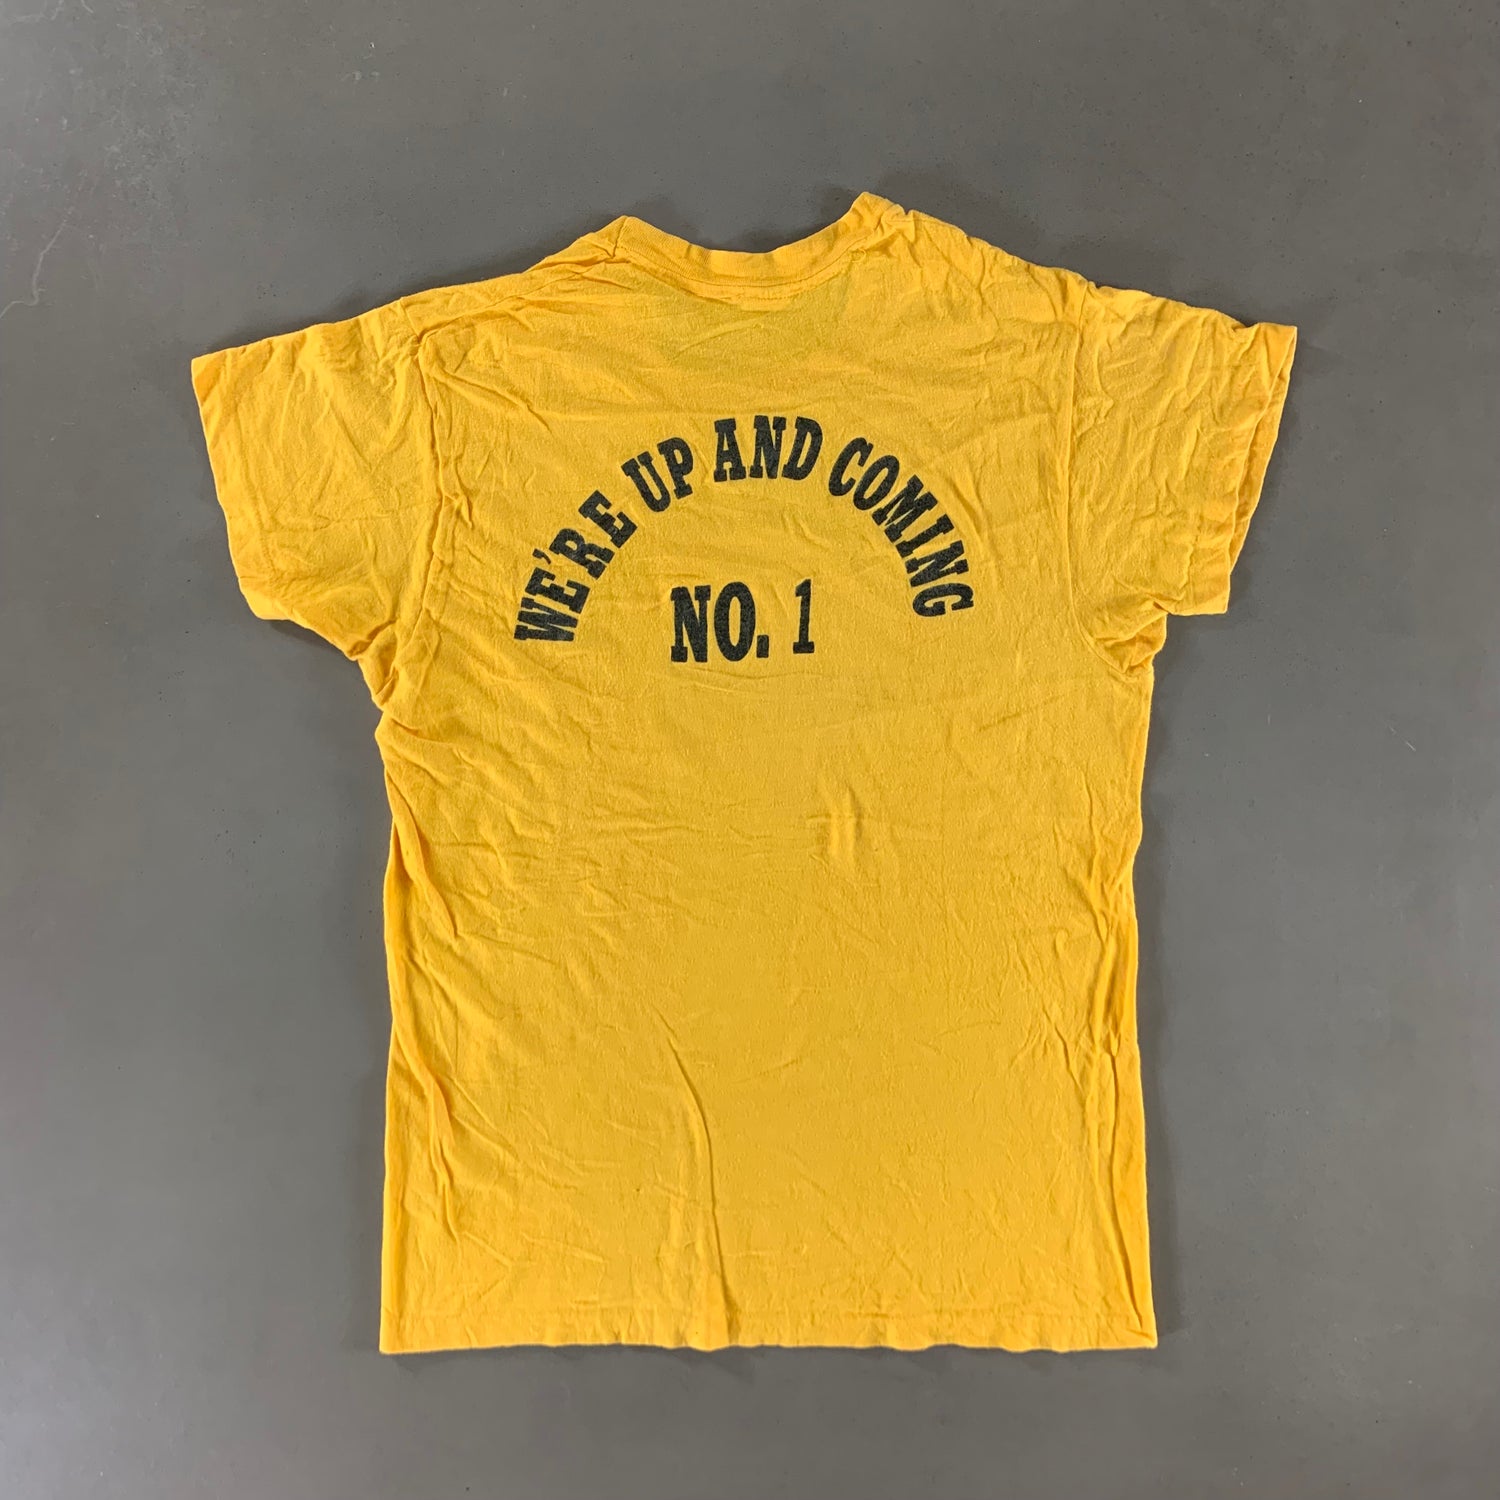 Vintage 1970s Appalachian State University T-shirt size Large